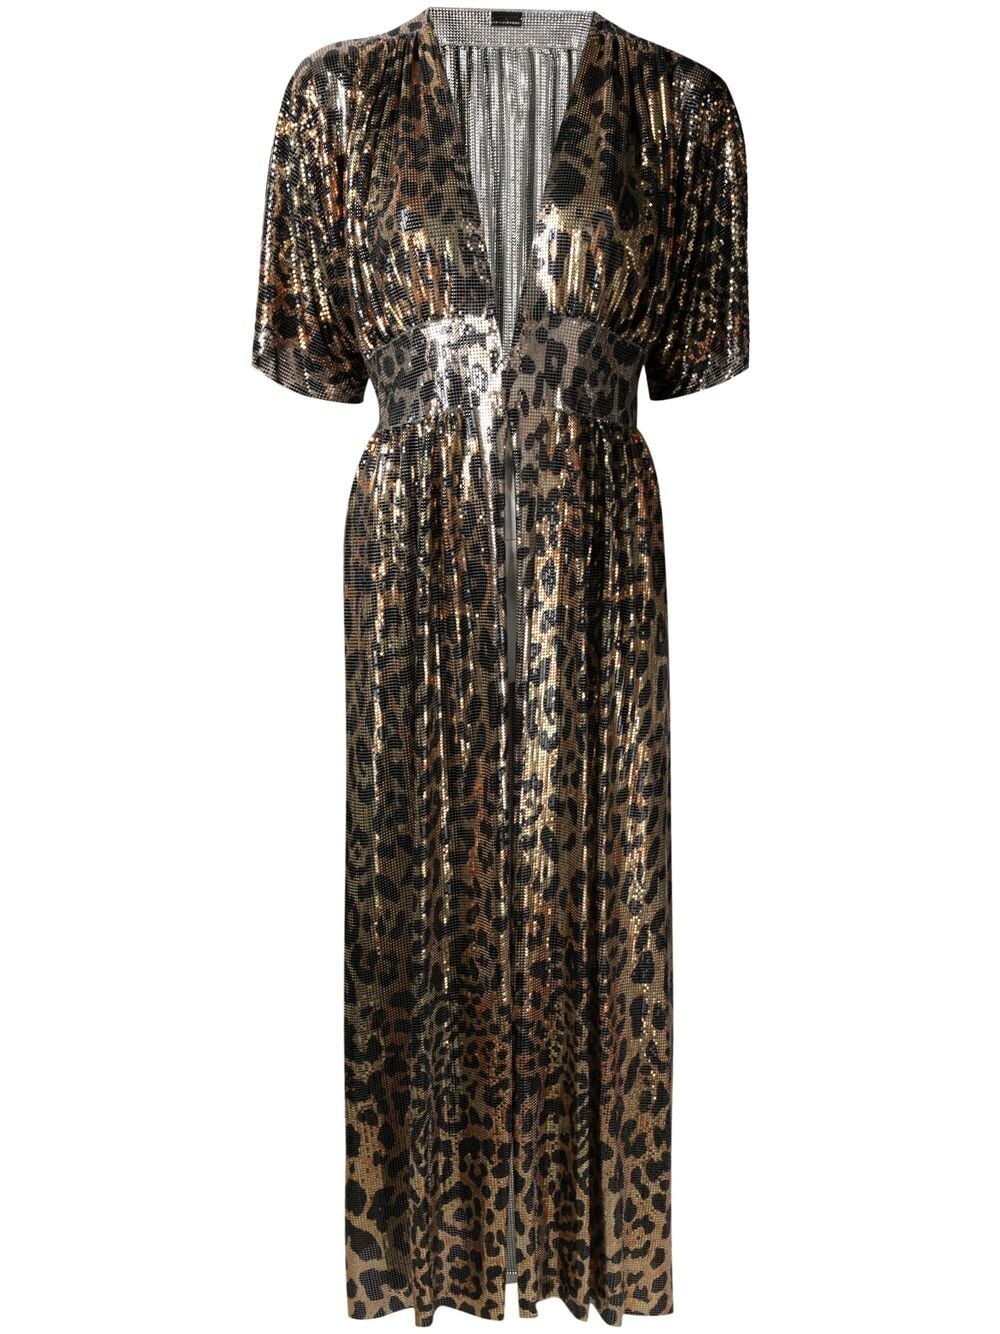 фото Paco rabanne платье с леопардовым принтом